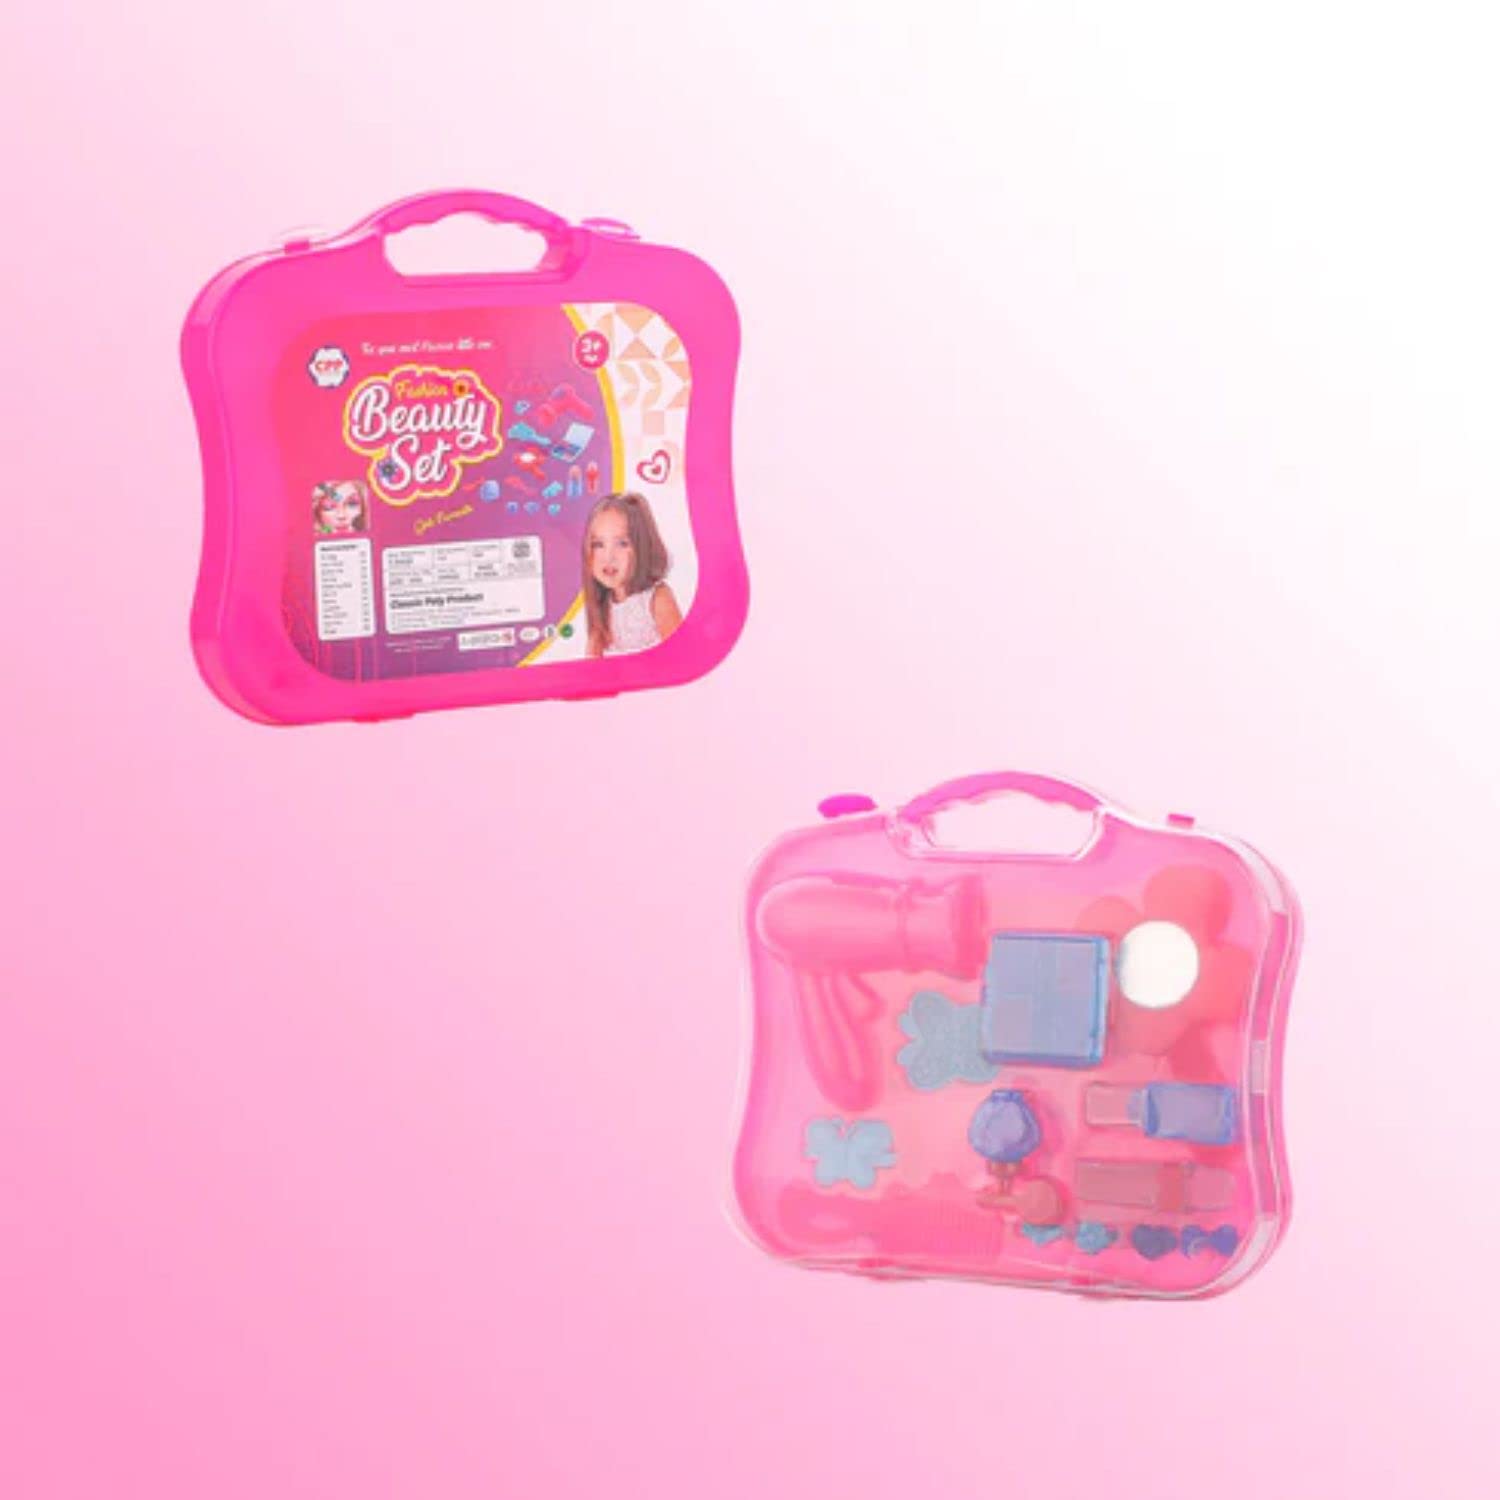 Kids Mandi Beauty Kit Toy Set Pretend Play Makeup Gift